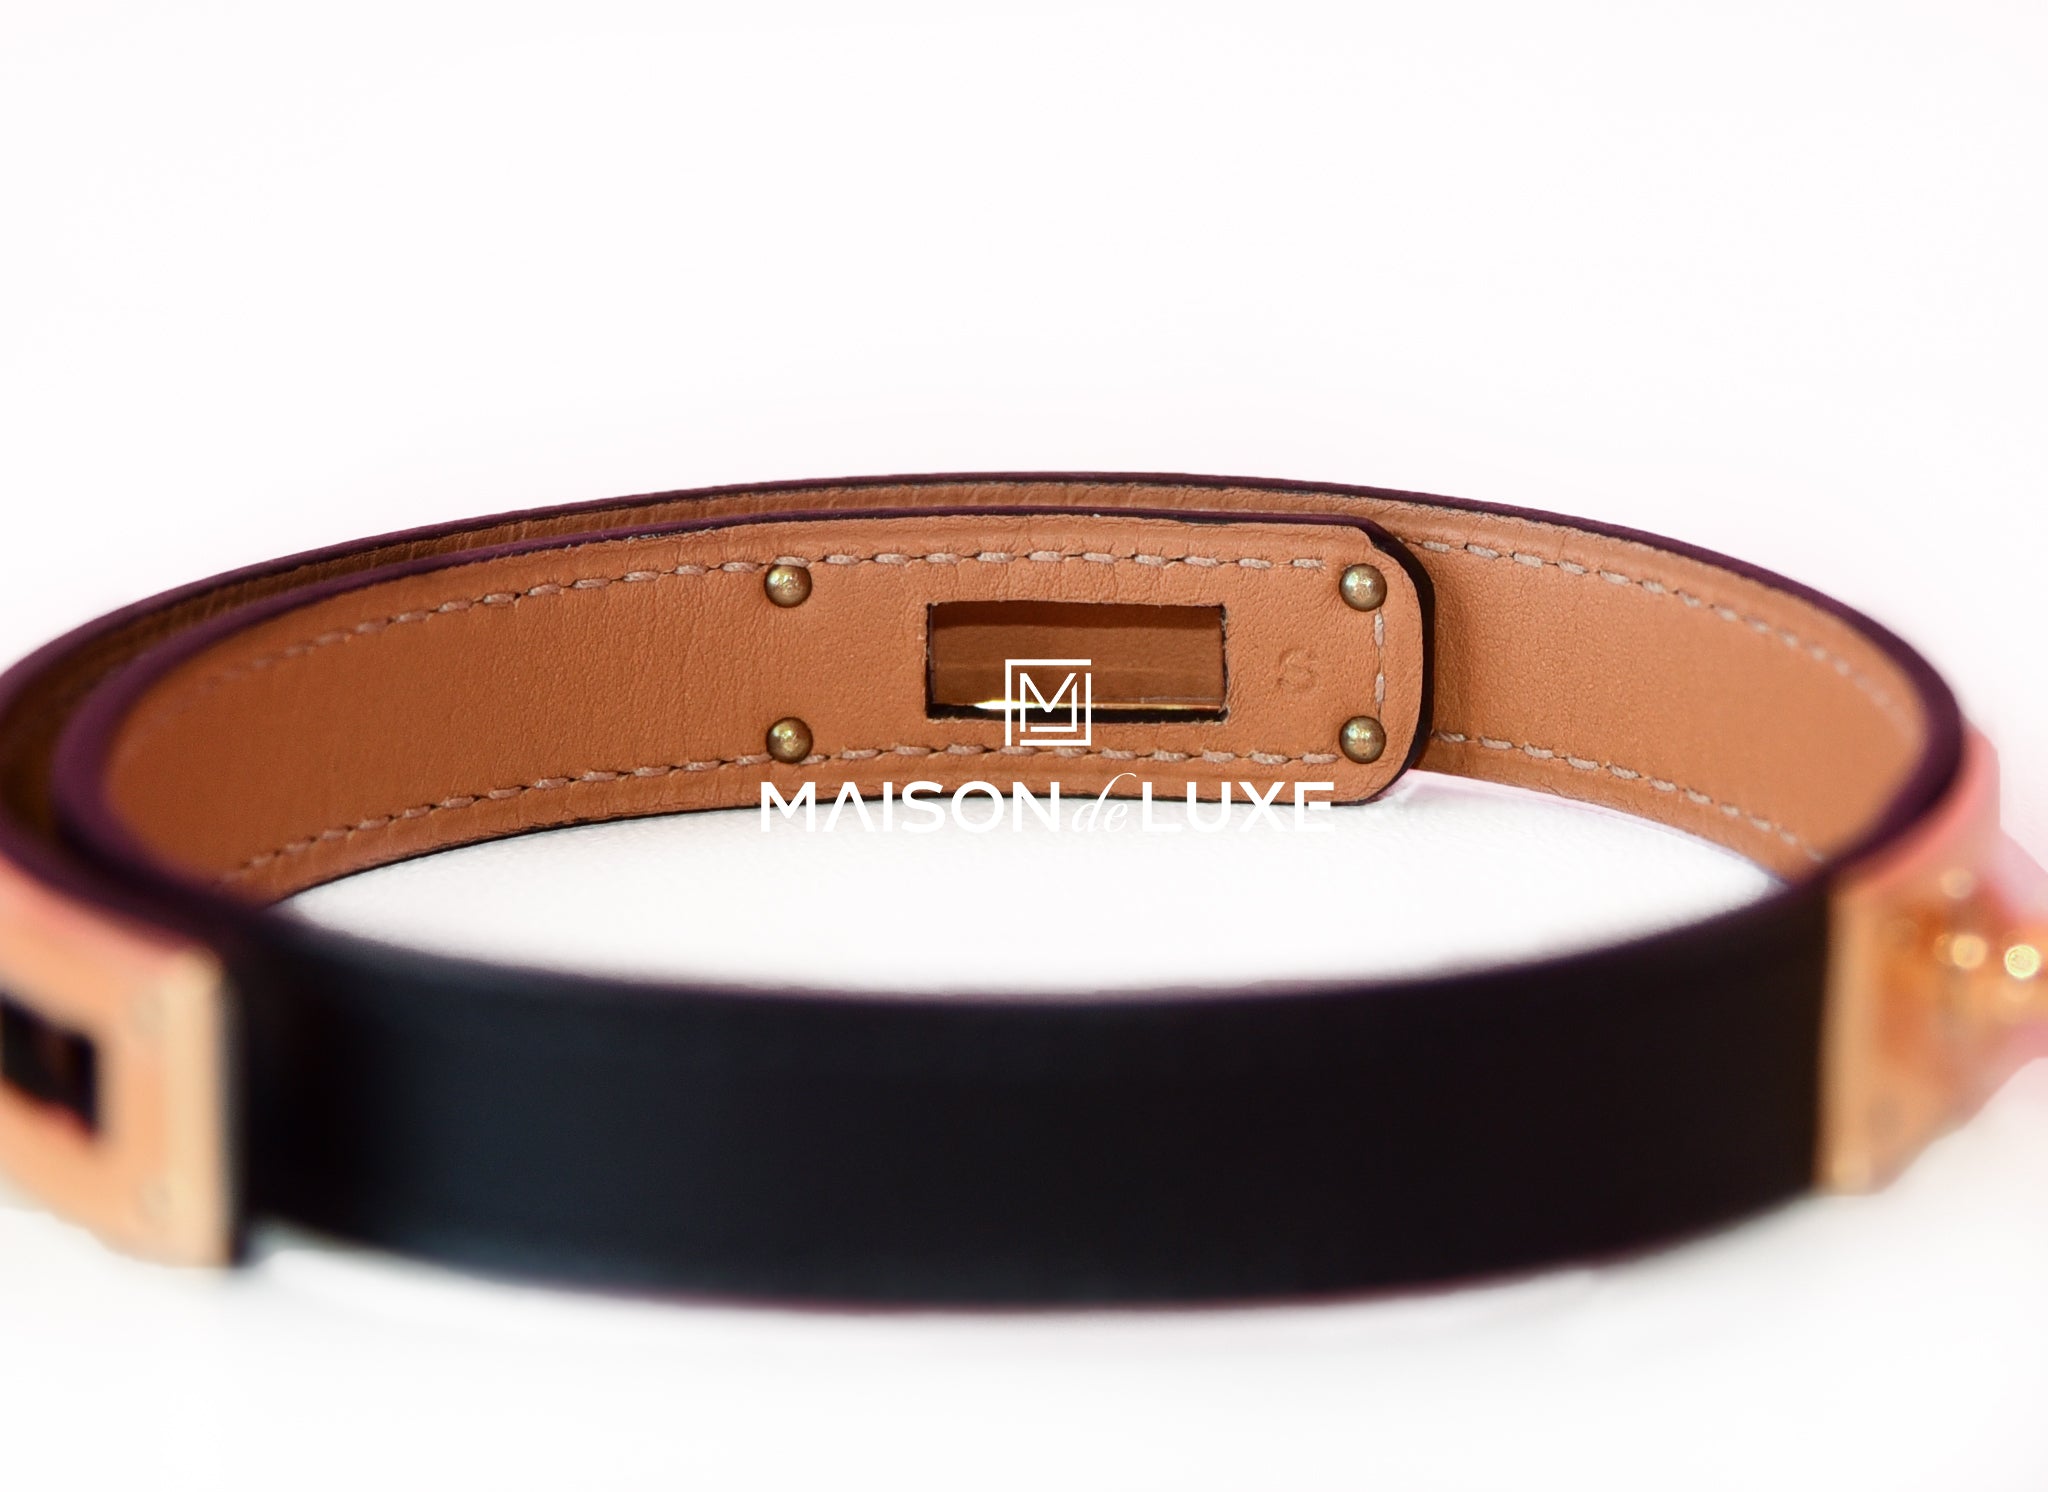 Hermès Kelly Double Tour So Black Bracelet - Metal Wrap, Bracelets -  HER54244